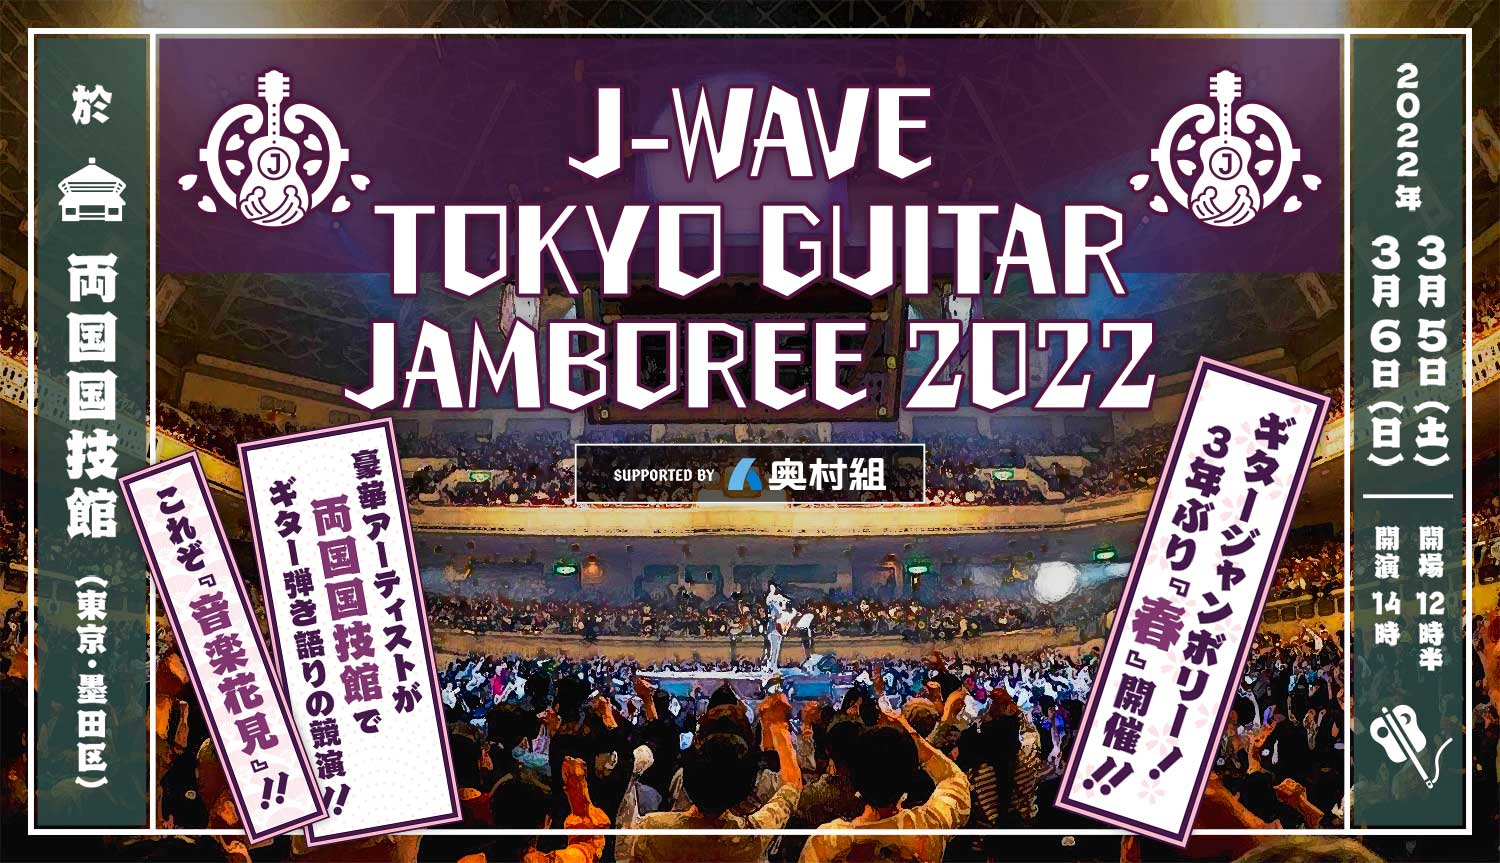 J-WAVEトーキョーギタージャンボリー2022 supported by 奥村組 チケットJ-me【最速】先行予約受付